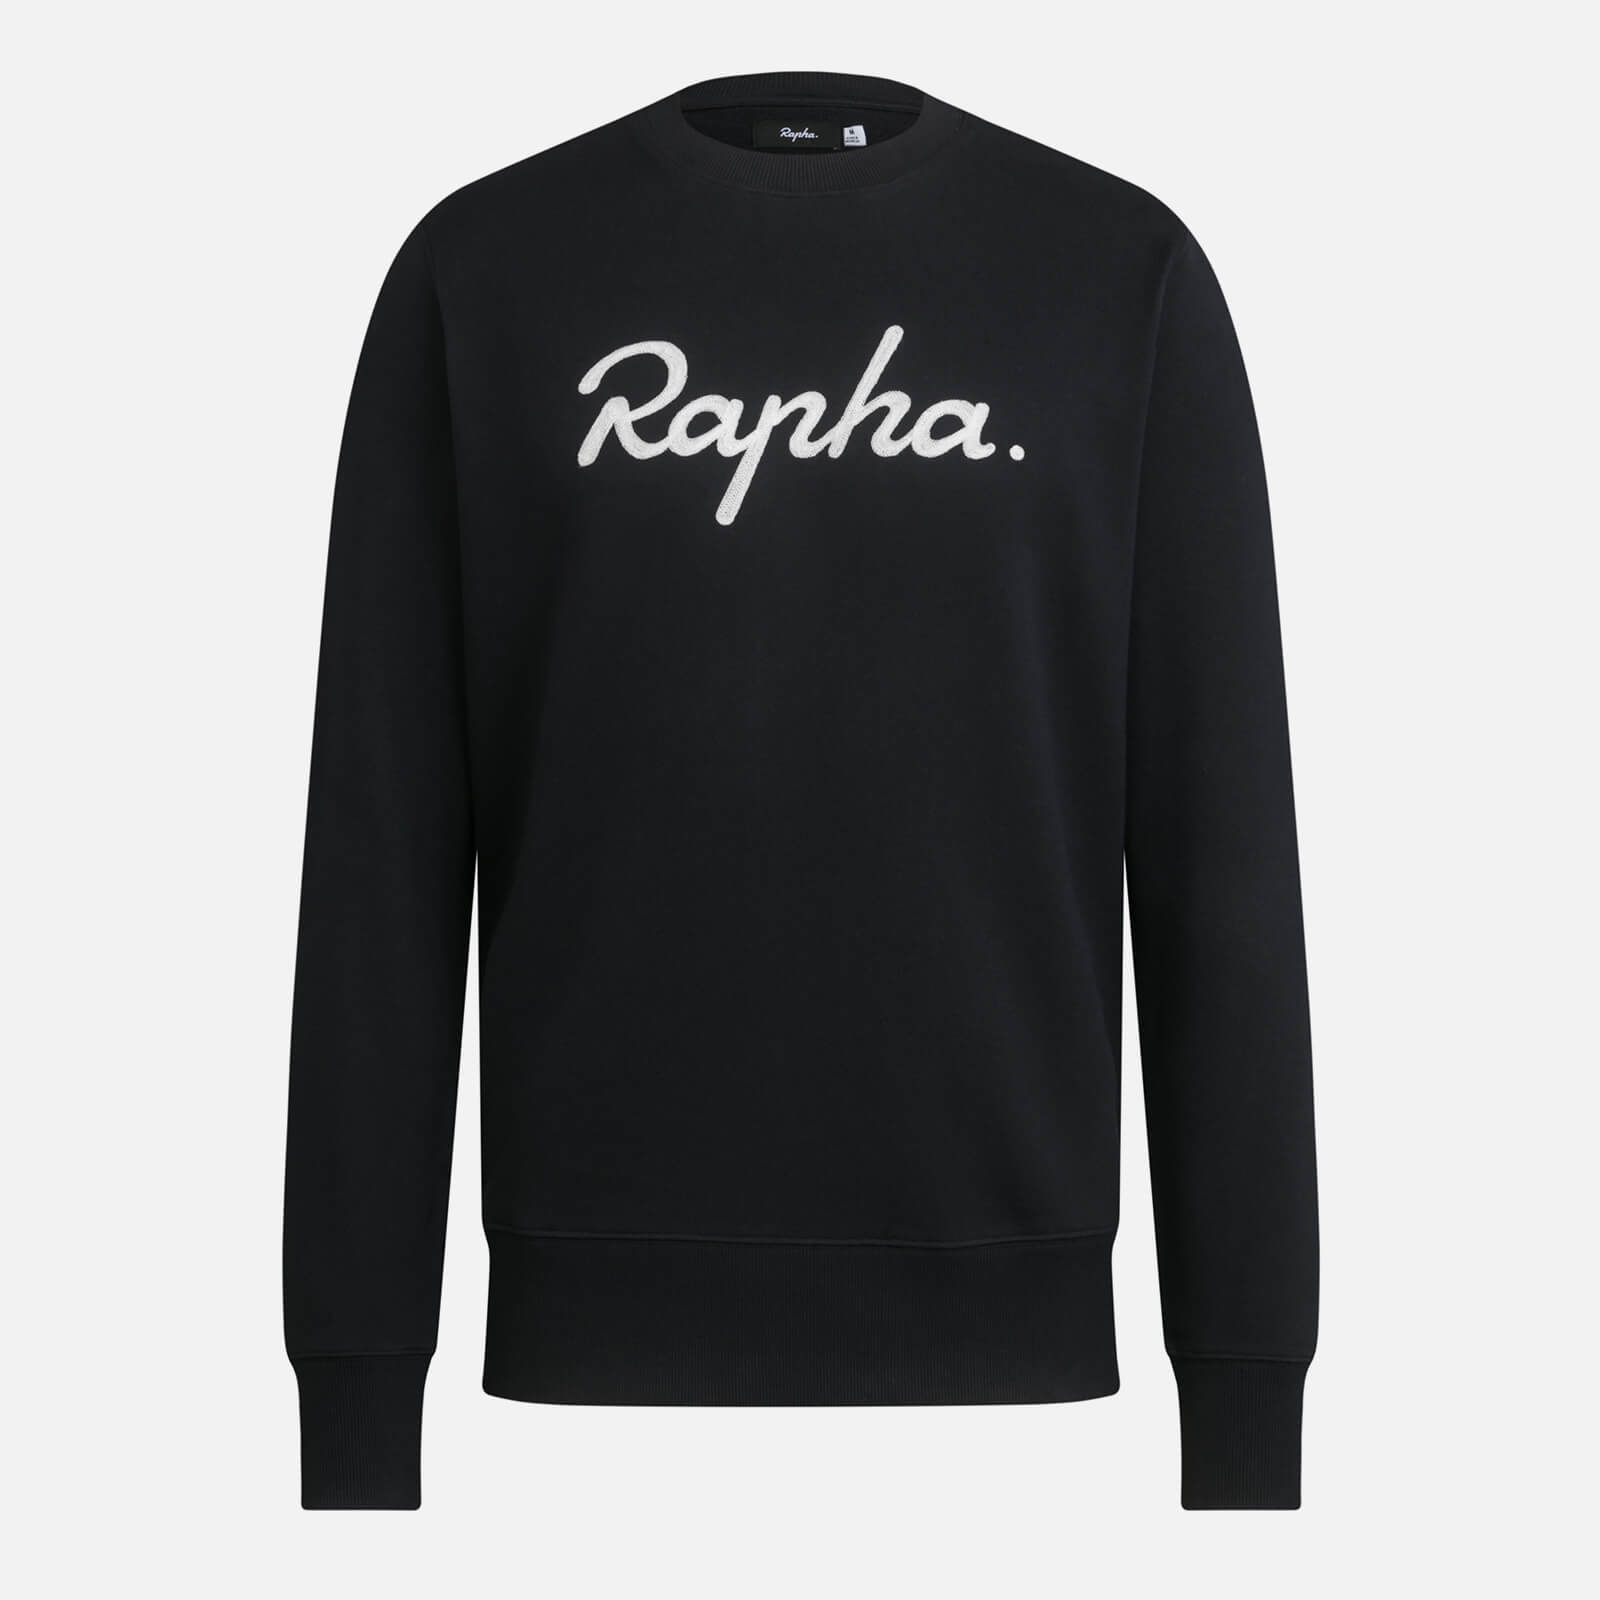 rapha men's logo sweatshirt - black/white - s